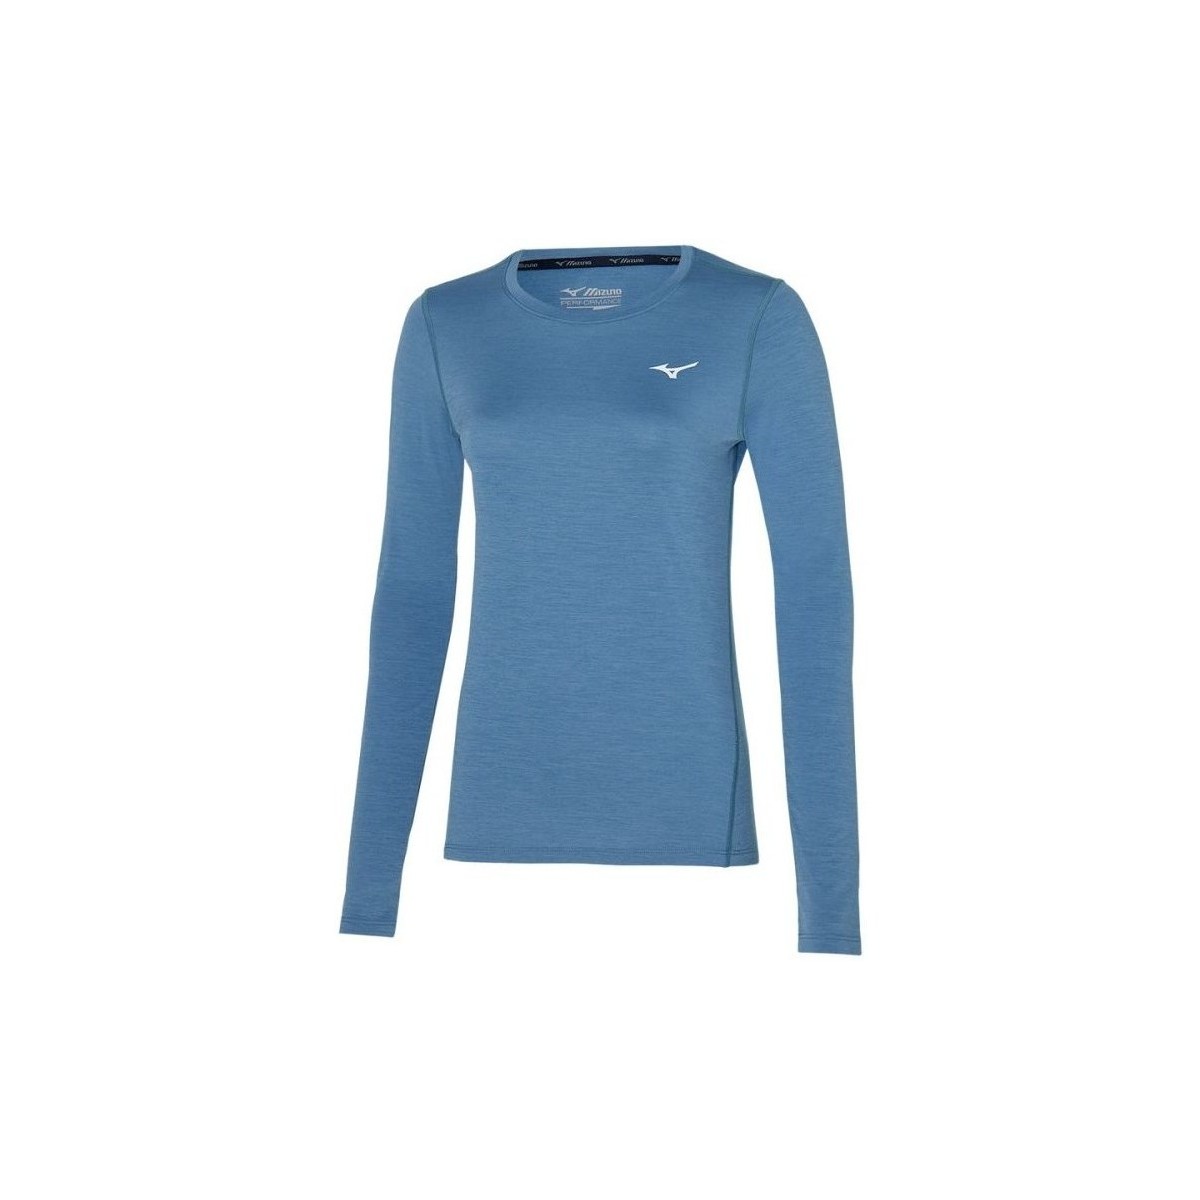 Textil Ženy Trička s krátkým rukávem Mizuno Impulse Core LS Tee Modrá